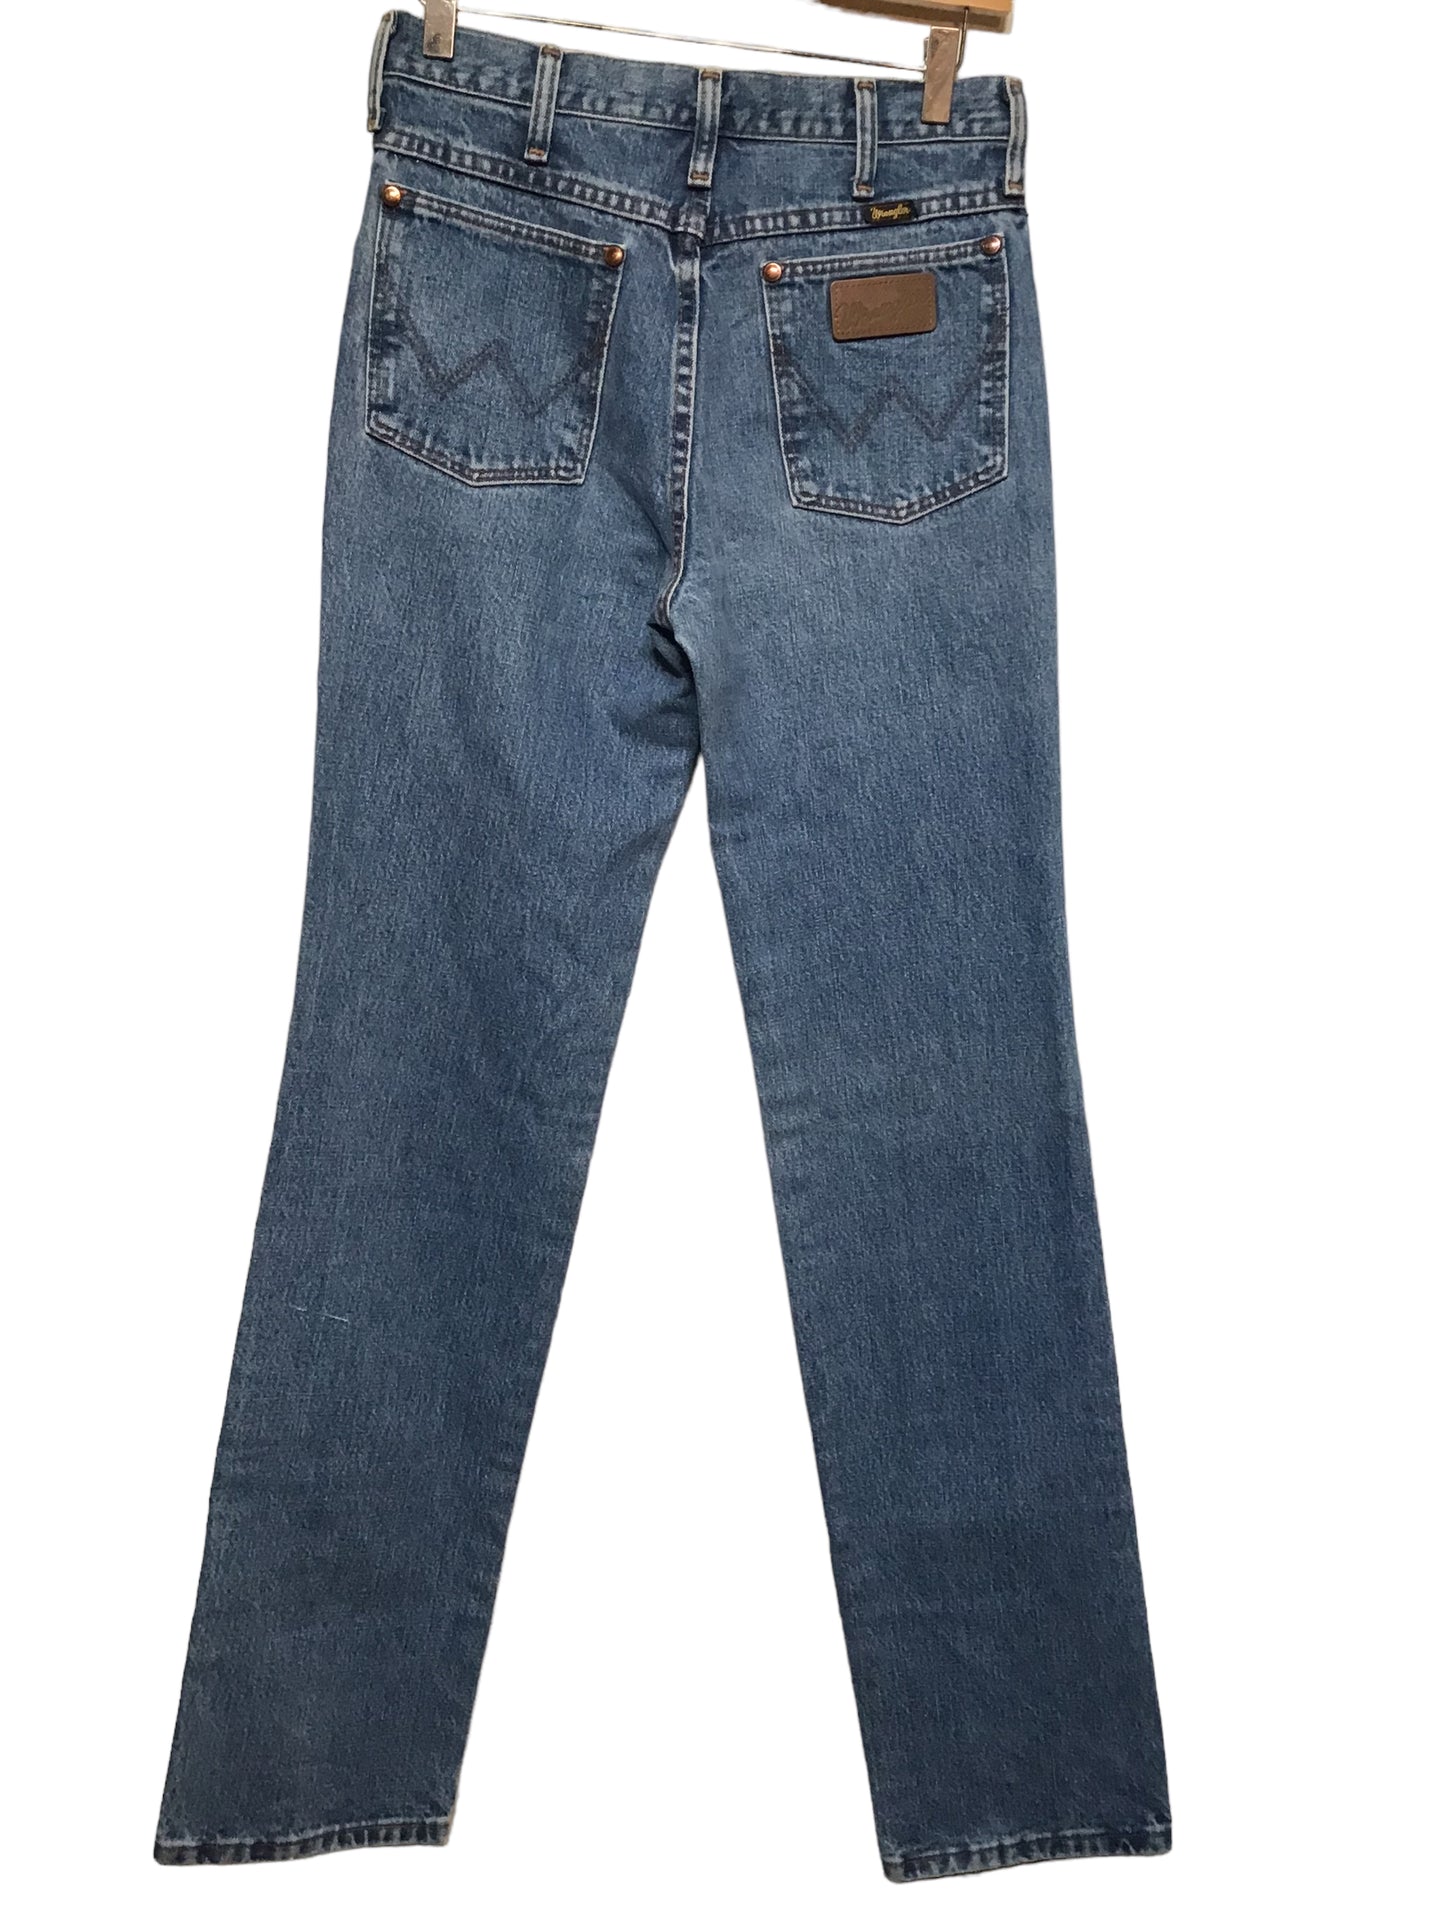 Wrangler Jeans (29x33)